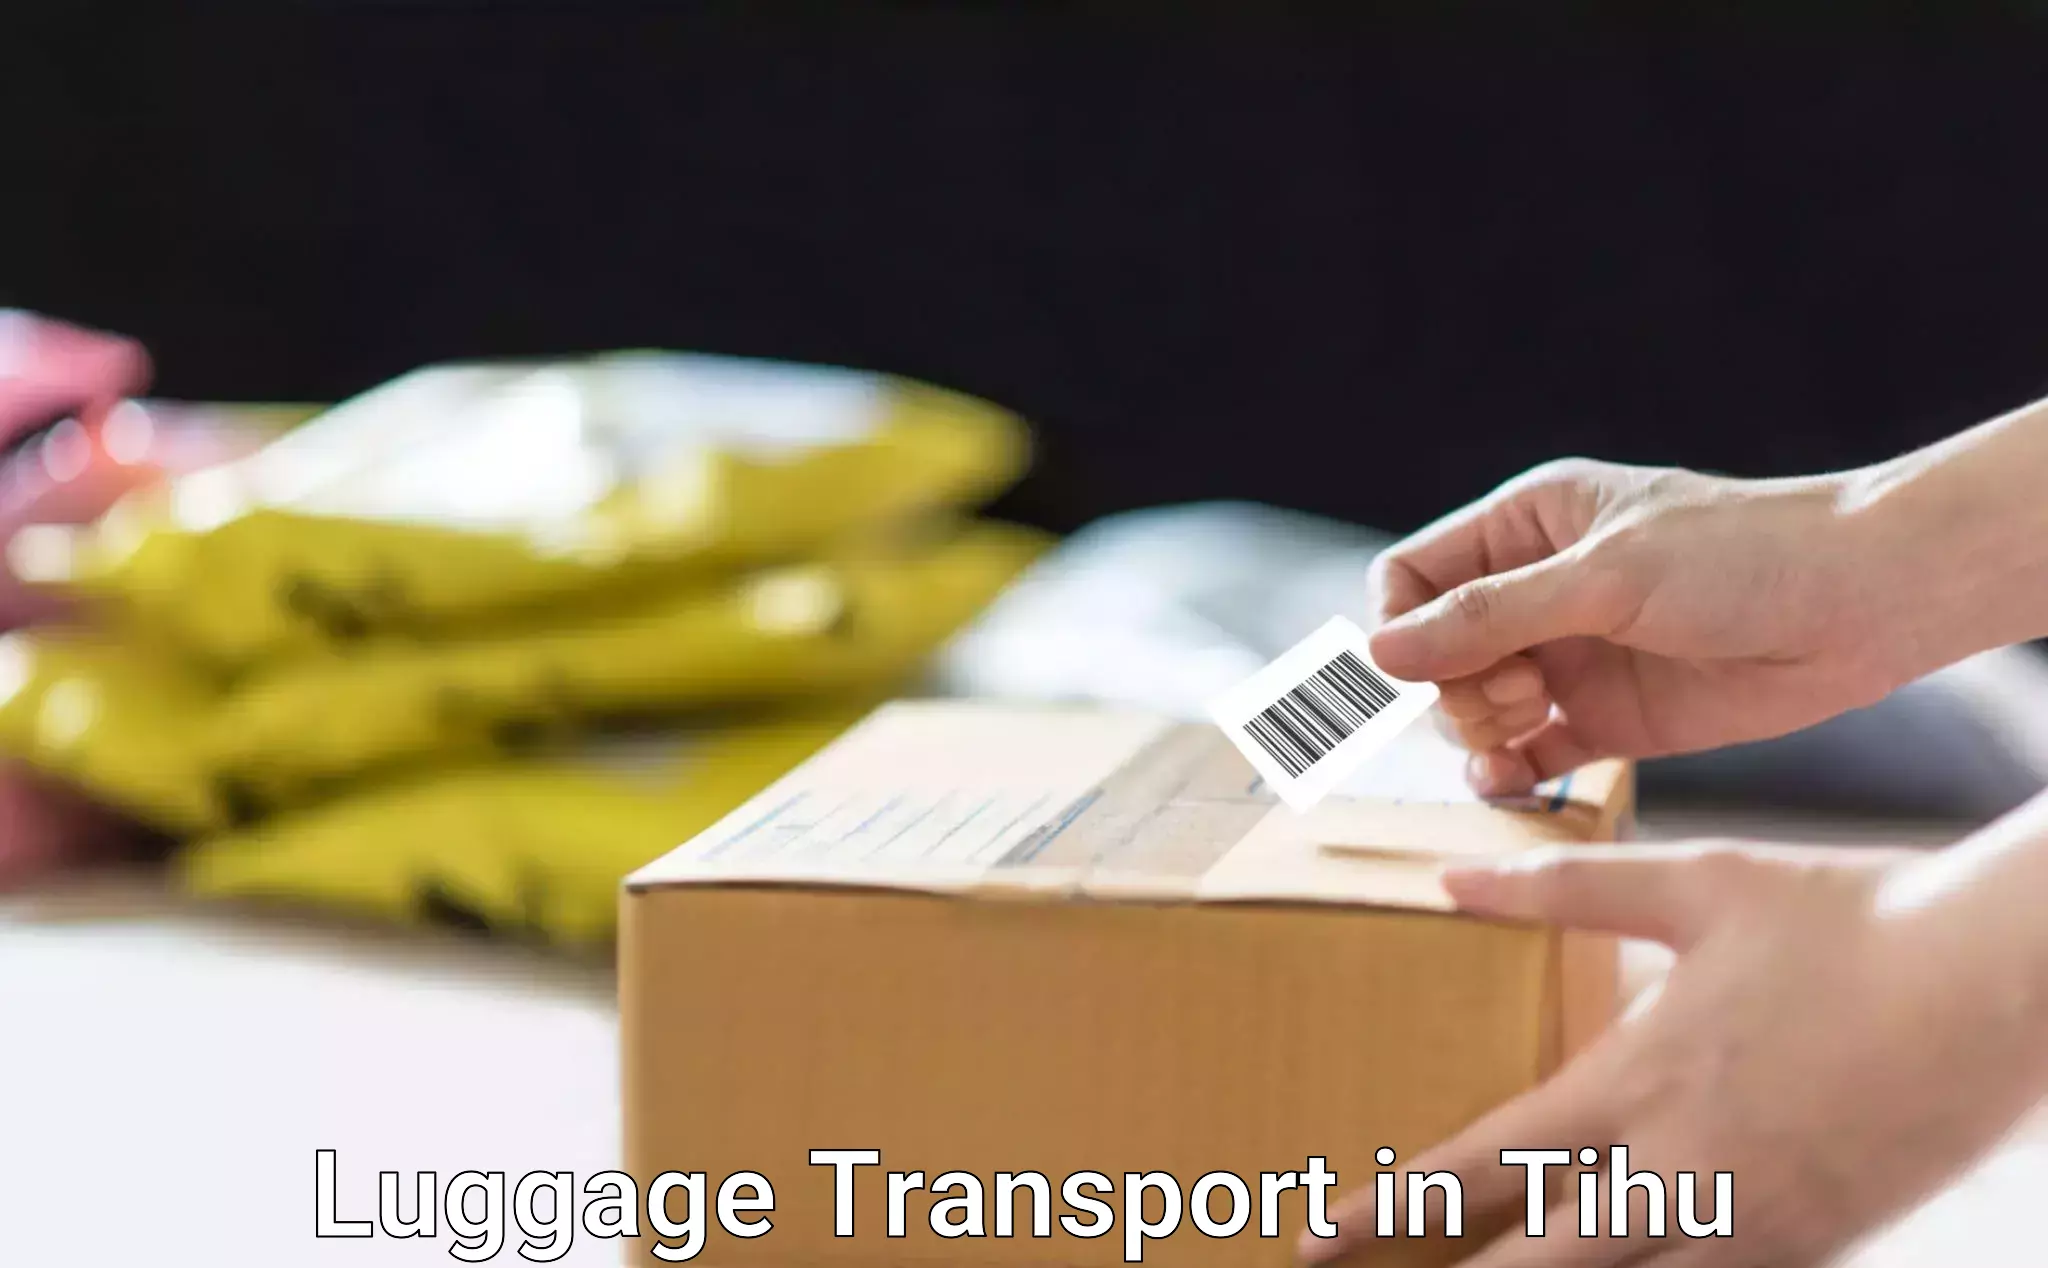 Business luggage transport in Tihu